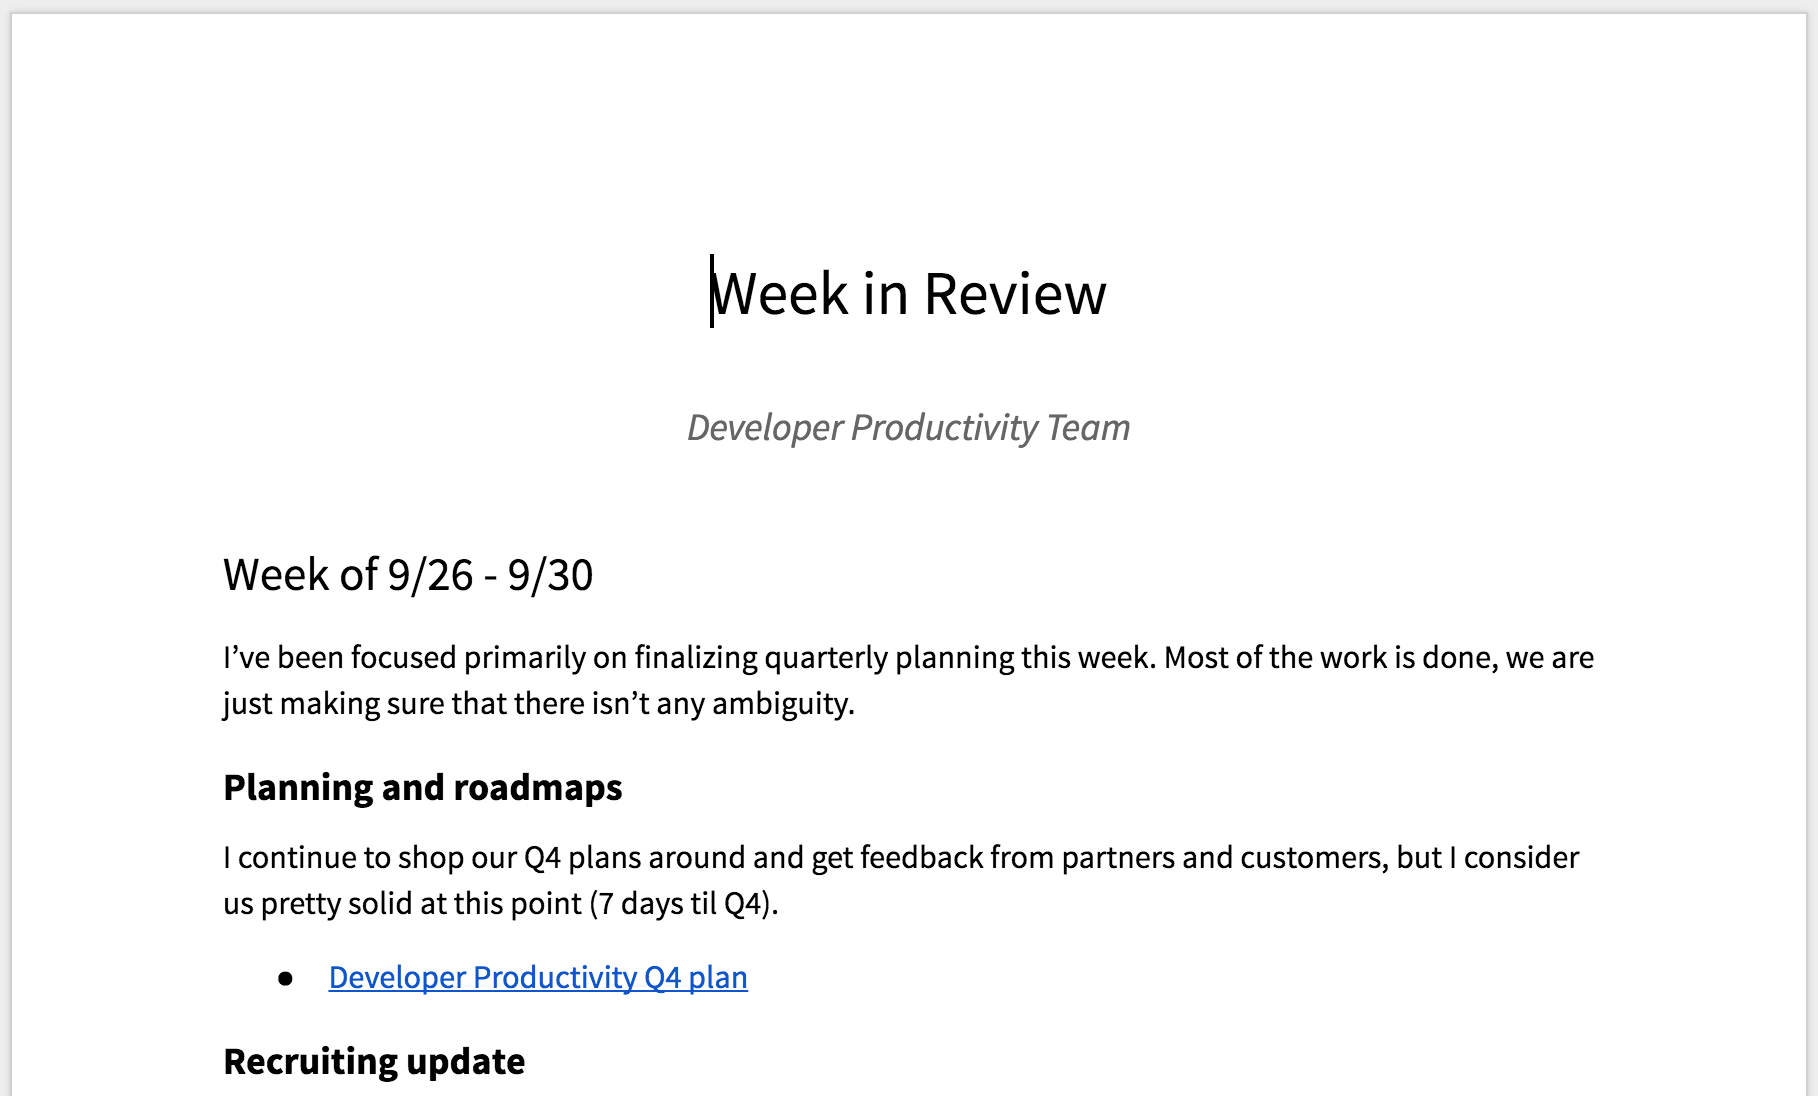 Week in Review Example